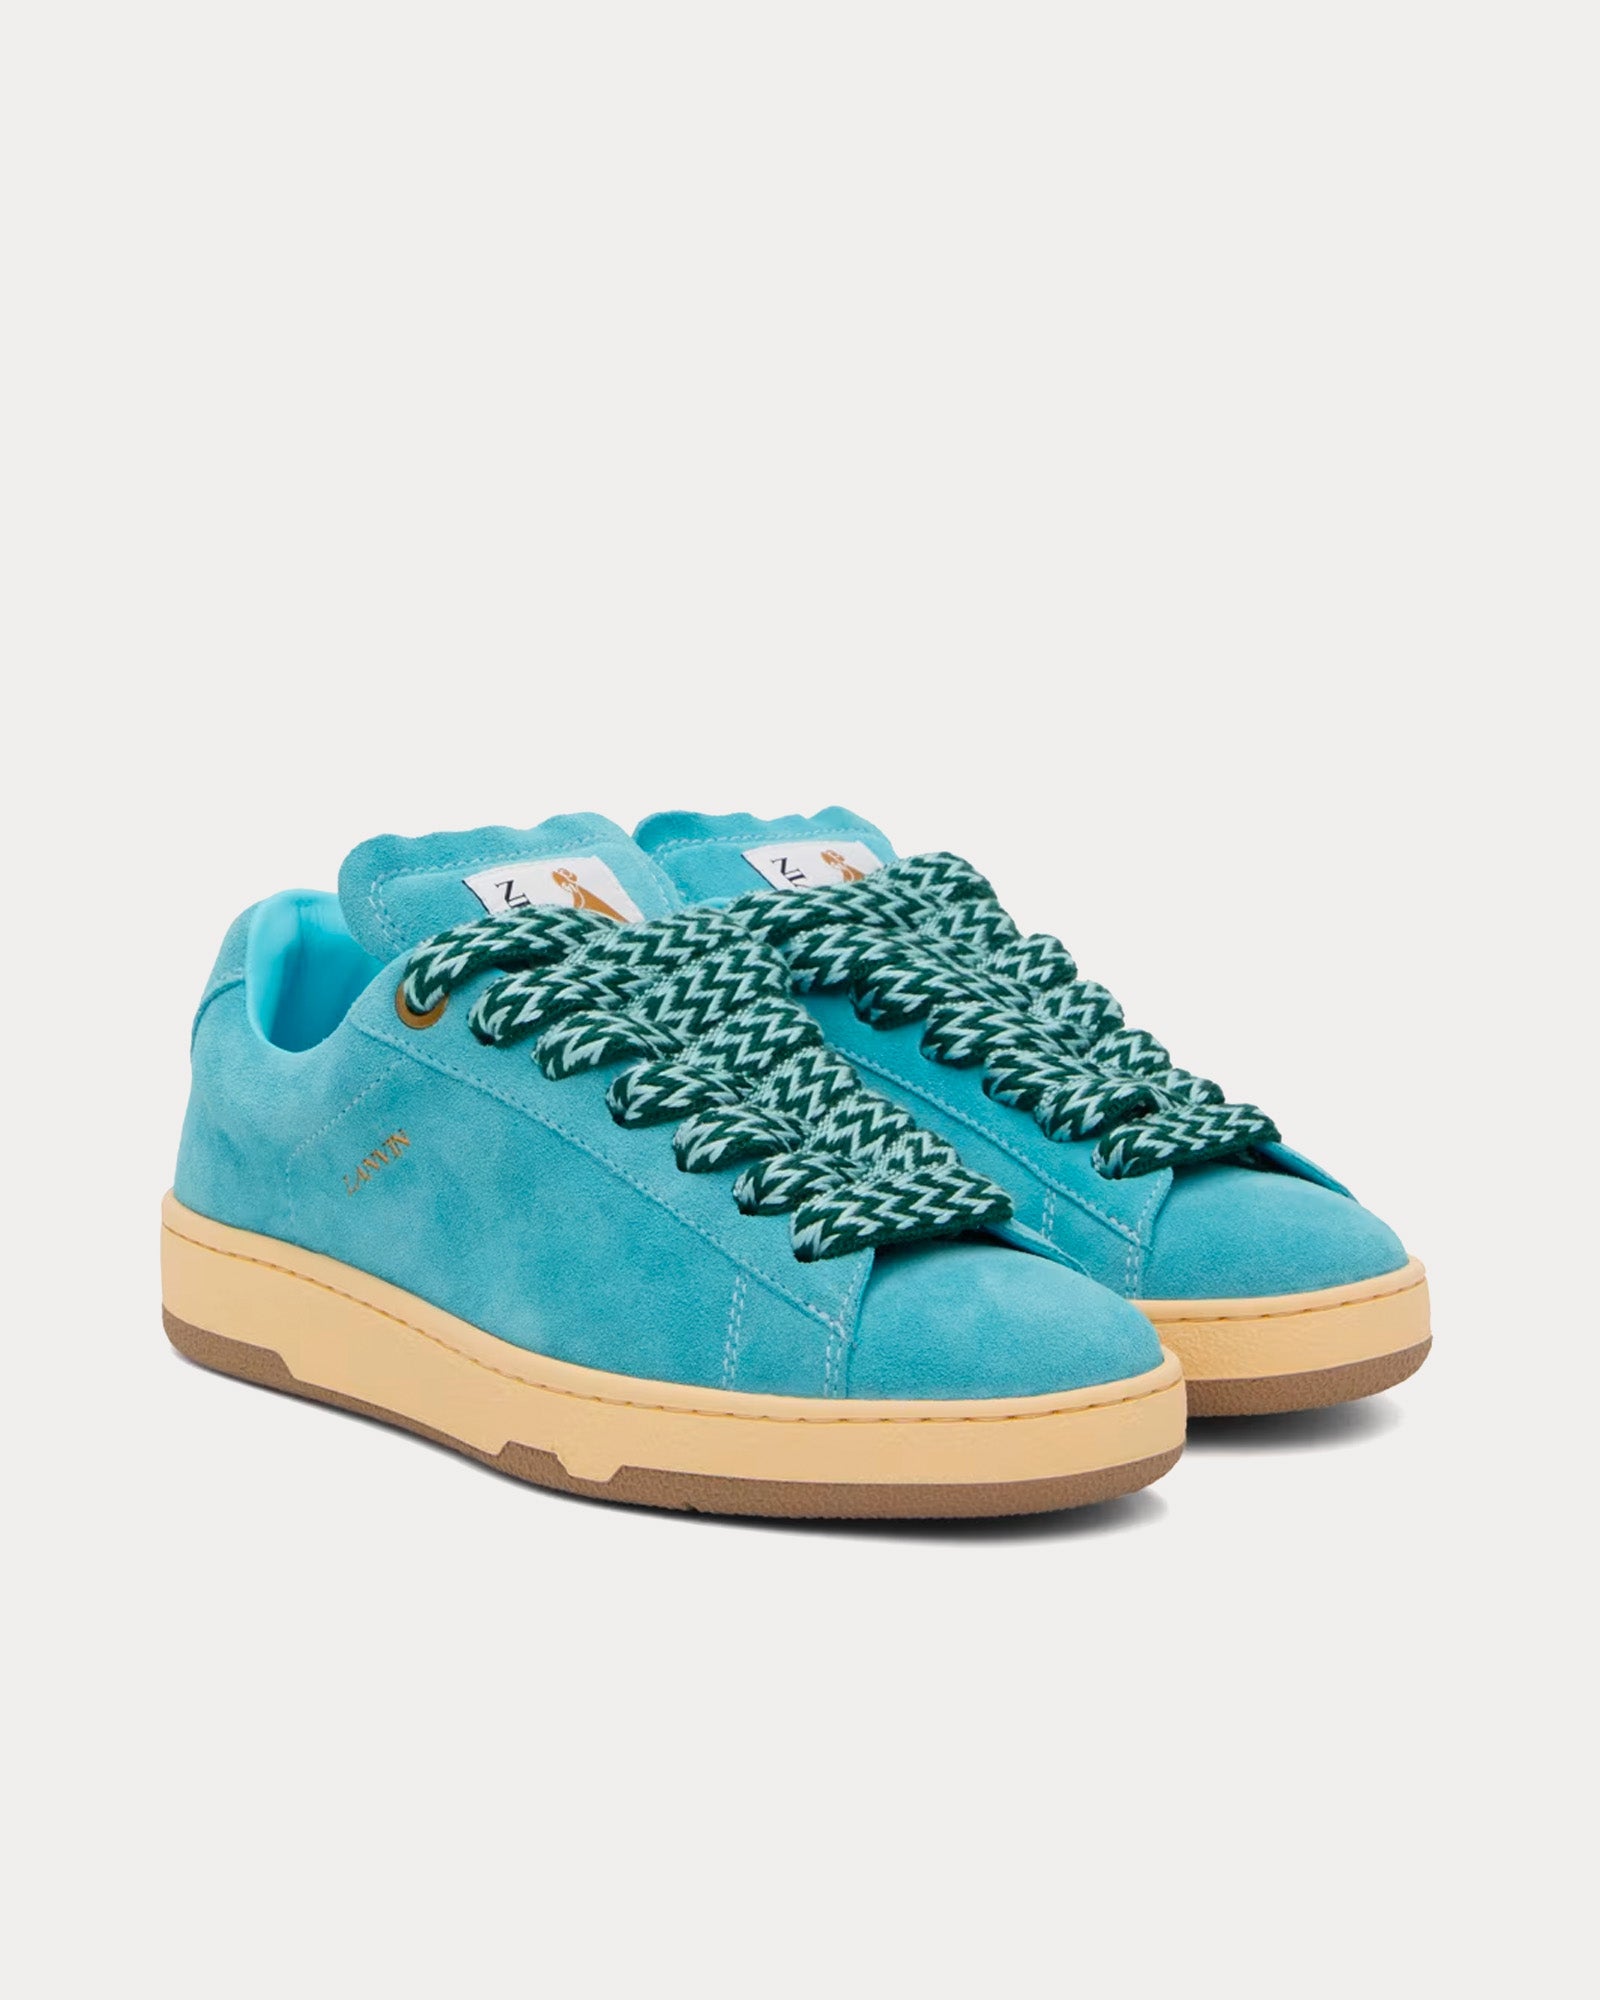 Lanvin - Lite Curb Suede Budgie Blue Low Top Sneakers